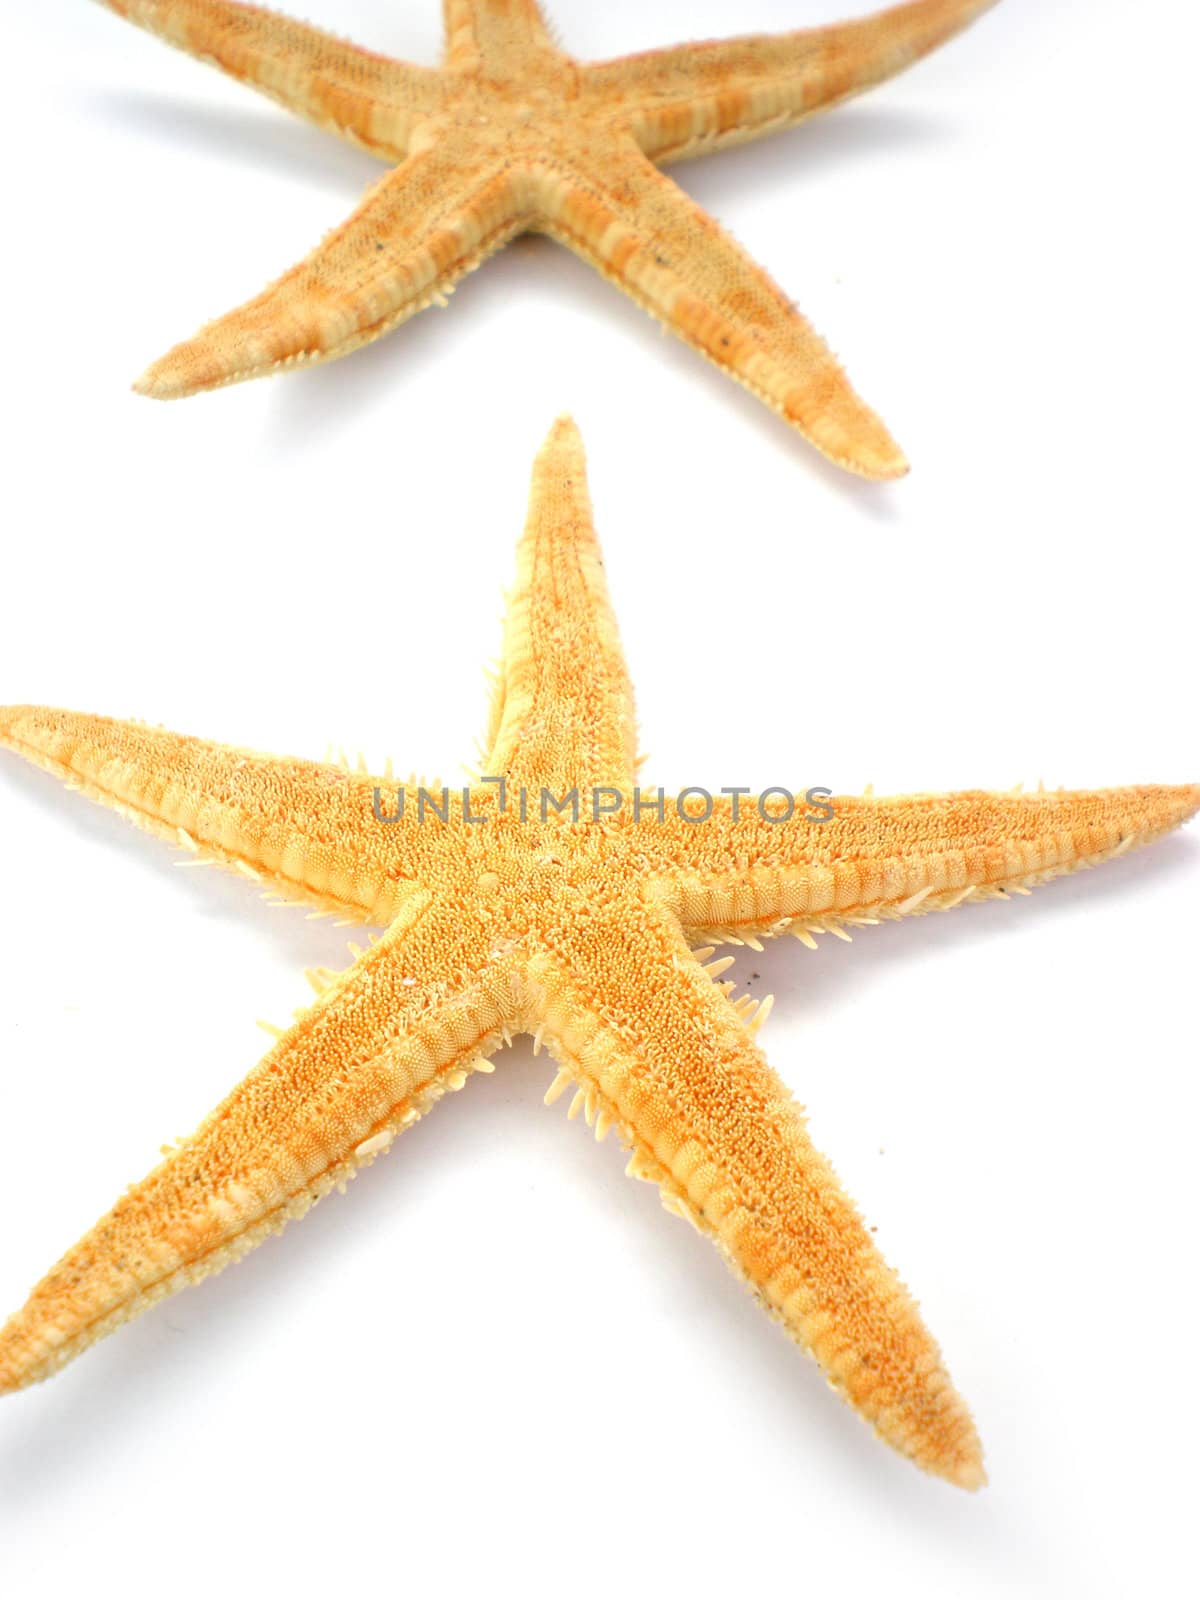 starfish isolated on white background by Dessie_bg